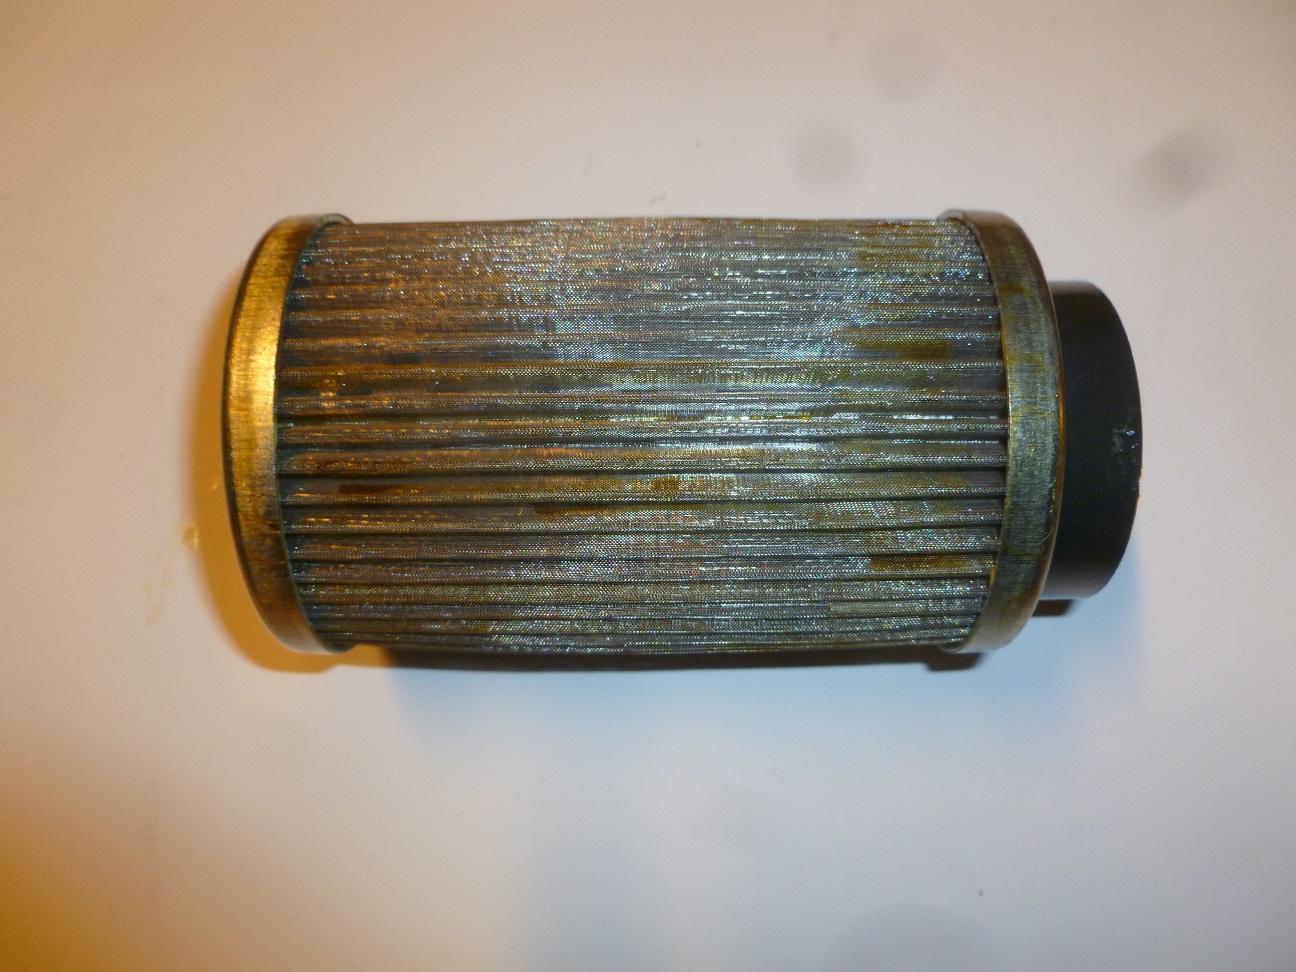 Фильтр масляный (элемент) TDX320 6LTE/Oil filter element,761G-17a-002